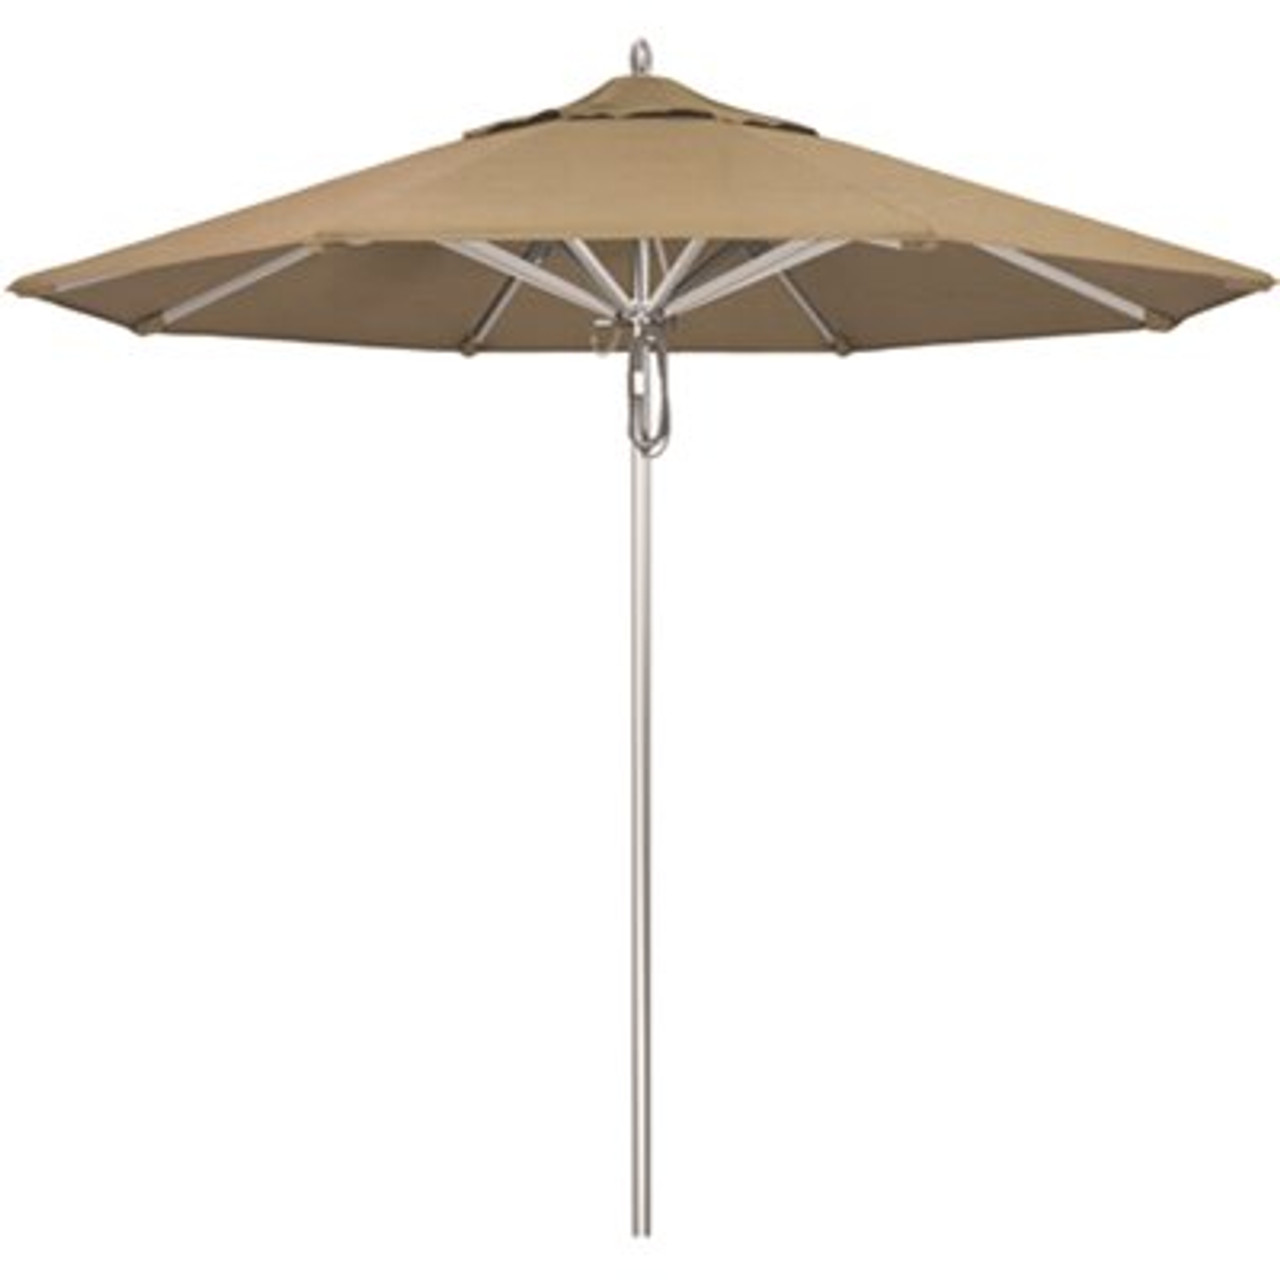 California Umbrella 9 ft. Silver Aluminum Commercial Market Patio Umbrella with Pulley Lift in Heather Beige Sunbrella